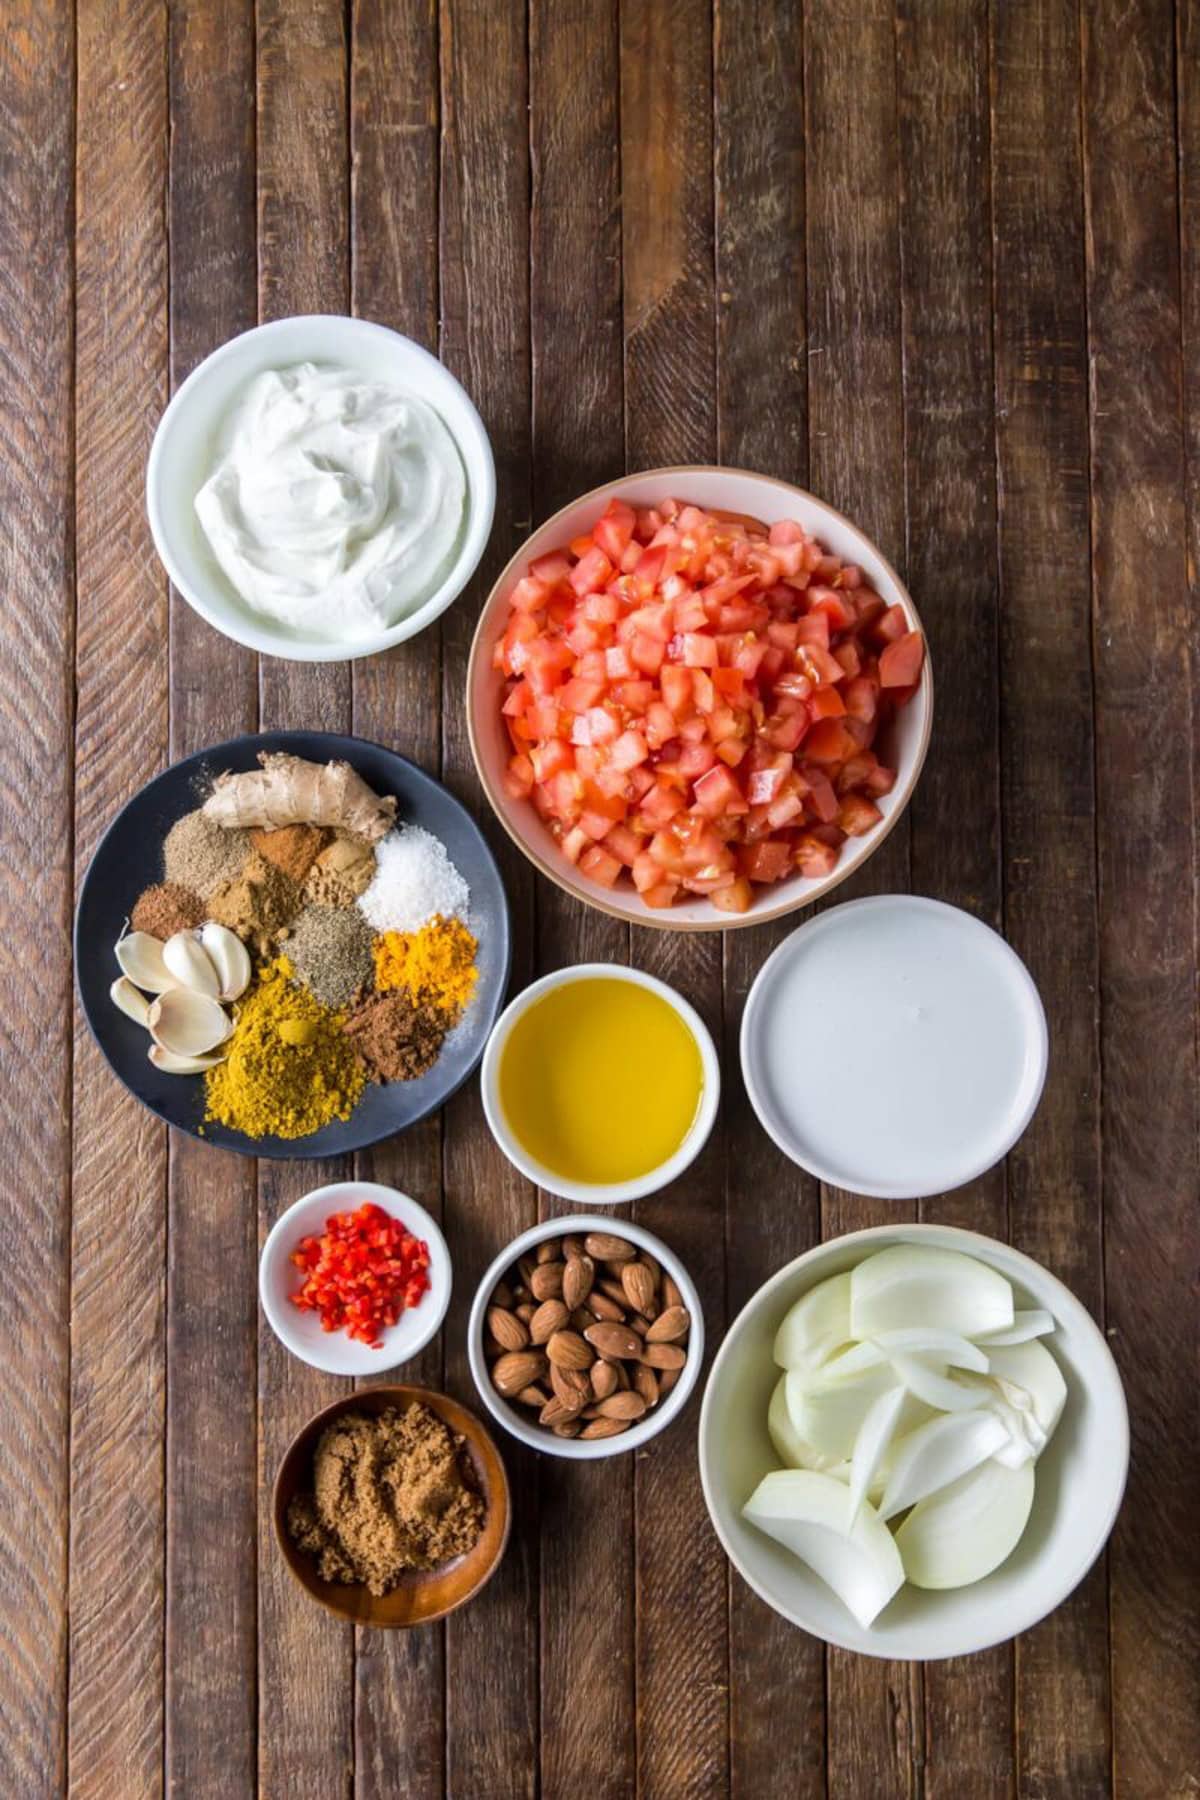 Ingredients for chicken korma sauce in bowls.